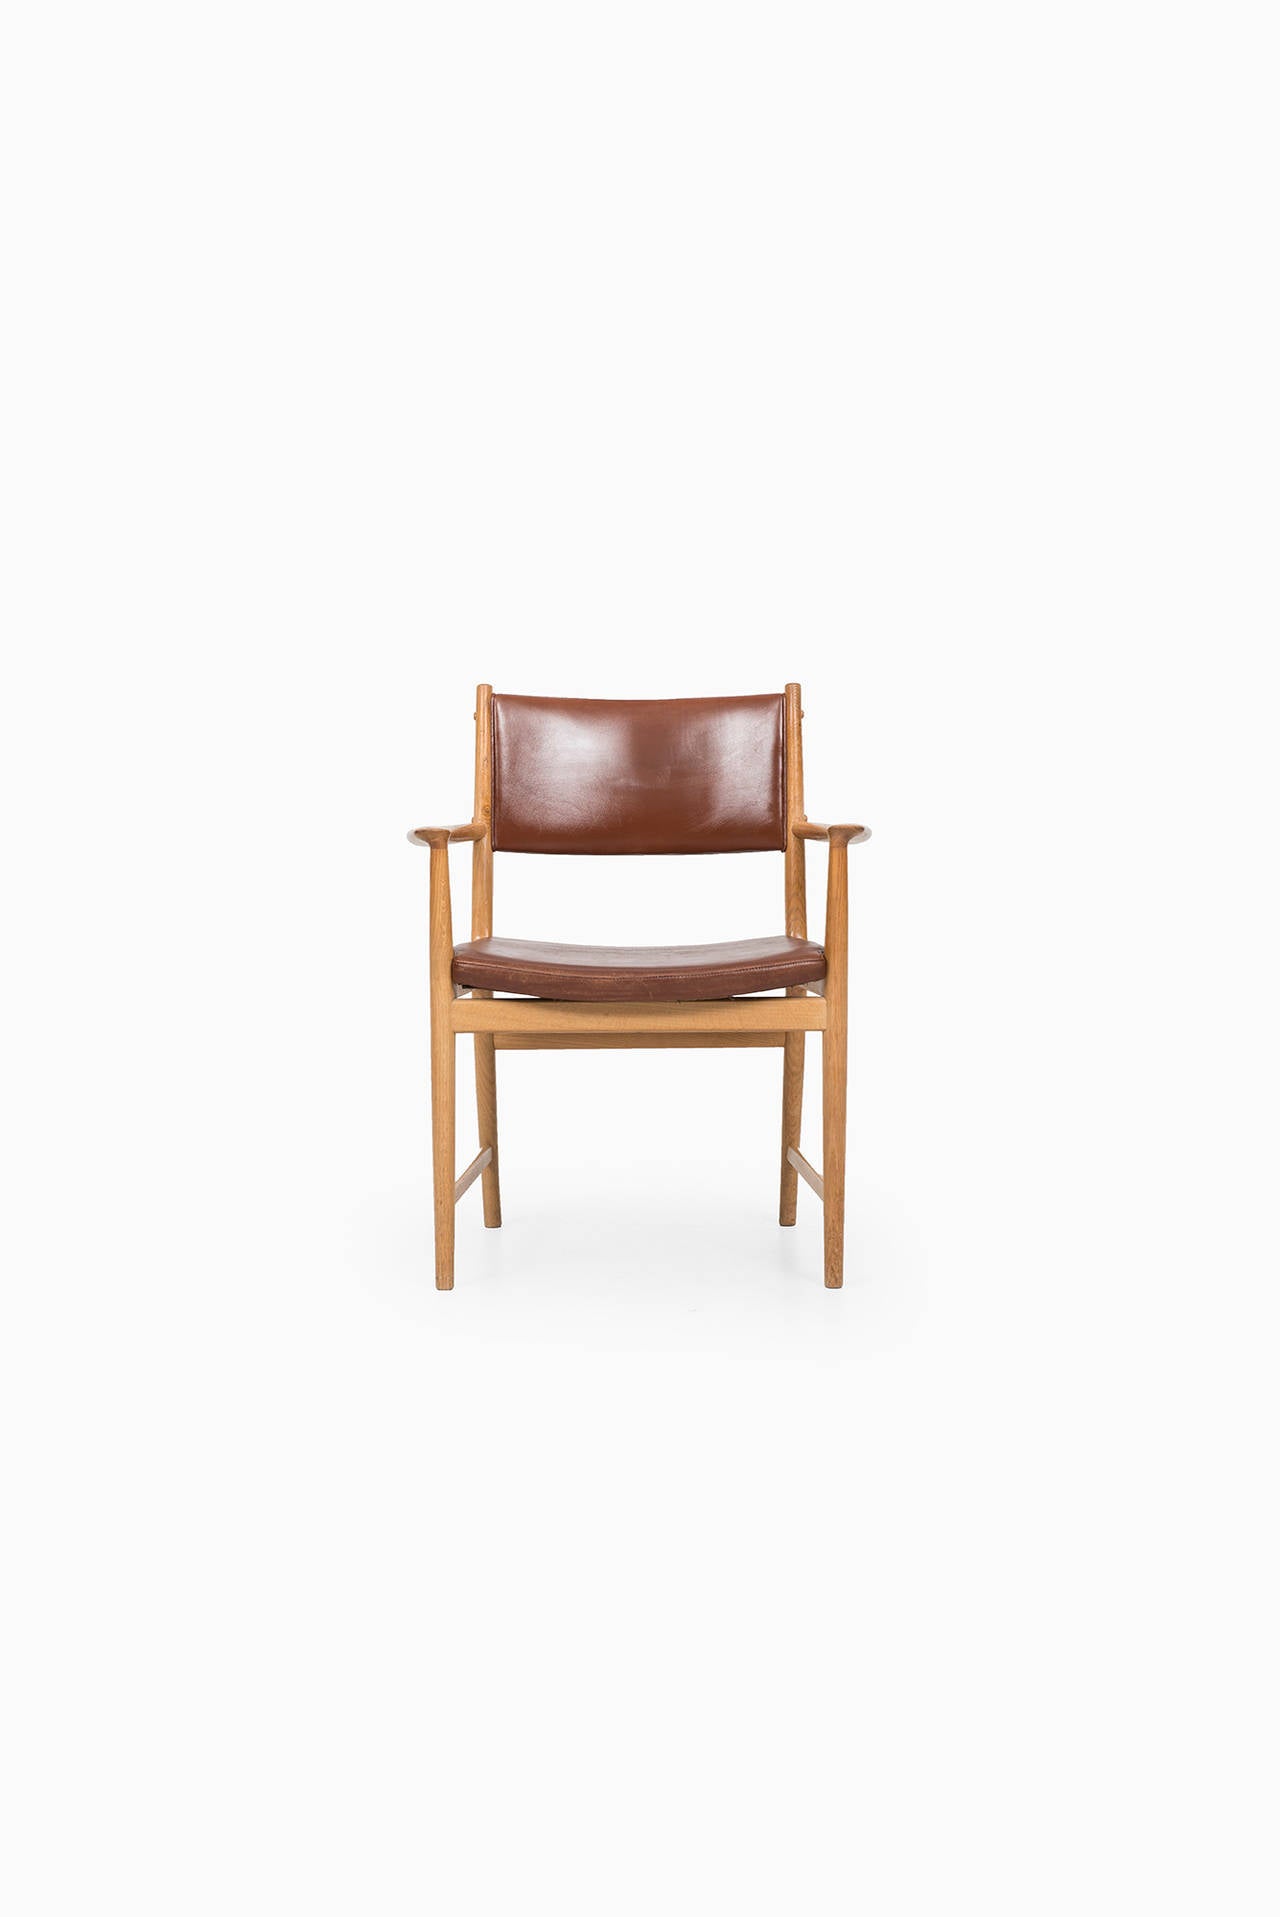 Rare set of six armchairs in oak and dark brown leather designed by Kai Lyngfeldt Larsen. Produced by Søren Willadsen in Denmark.